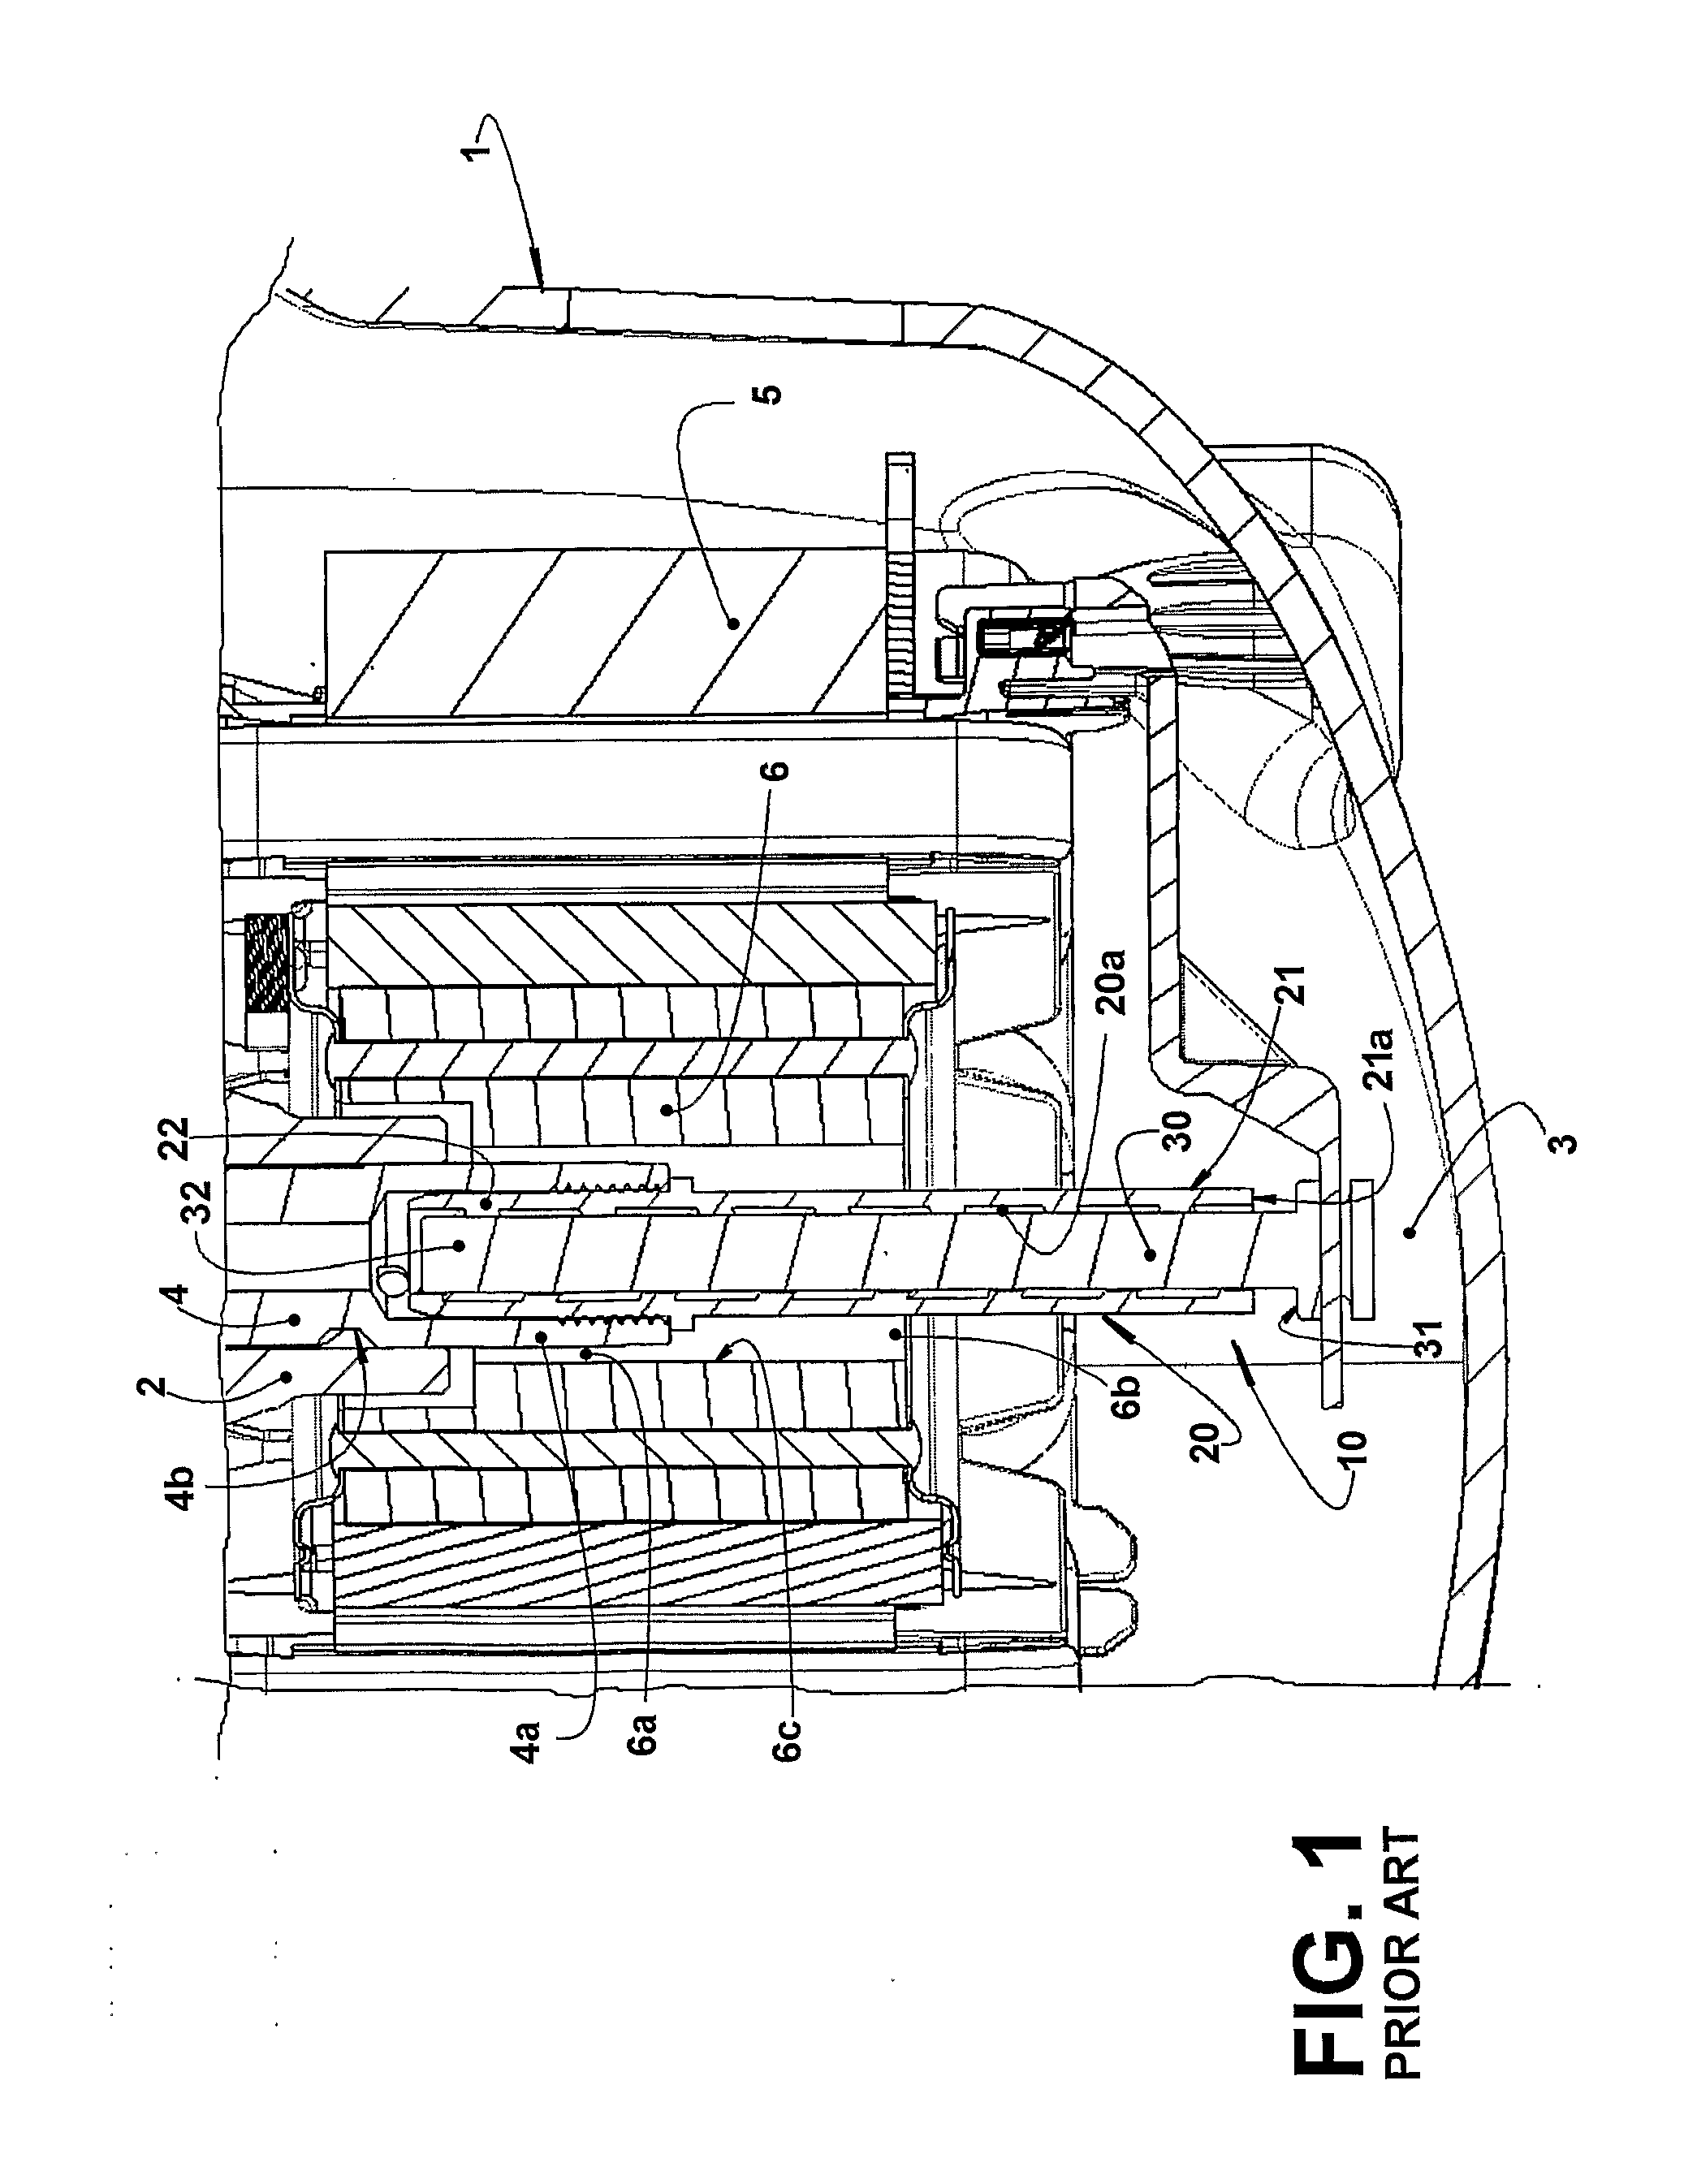 Fixation arrangement for an oil pump in a refrigeration compressor